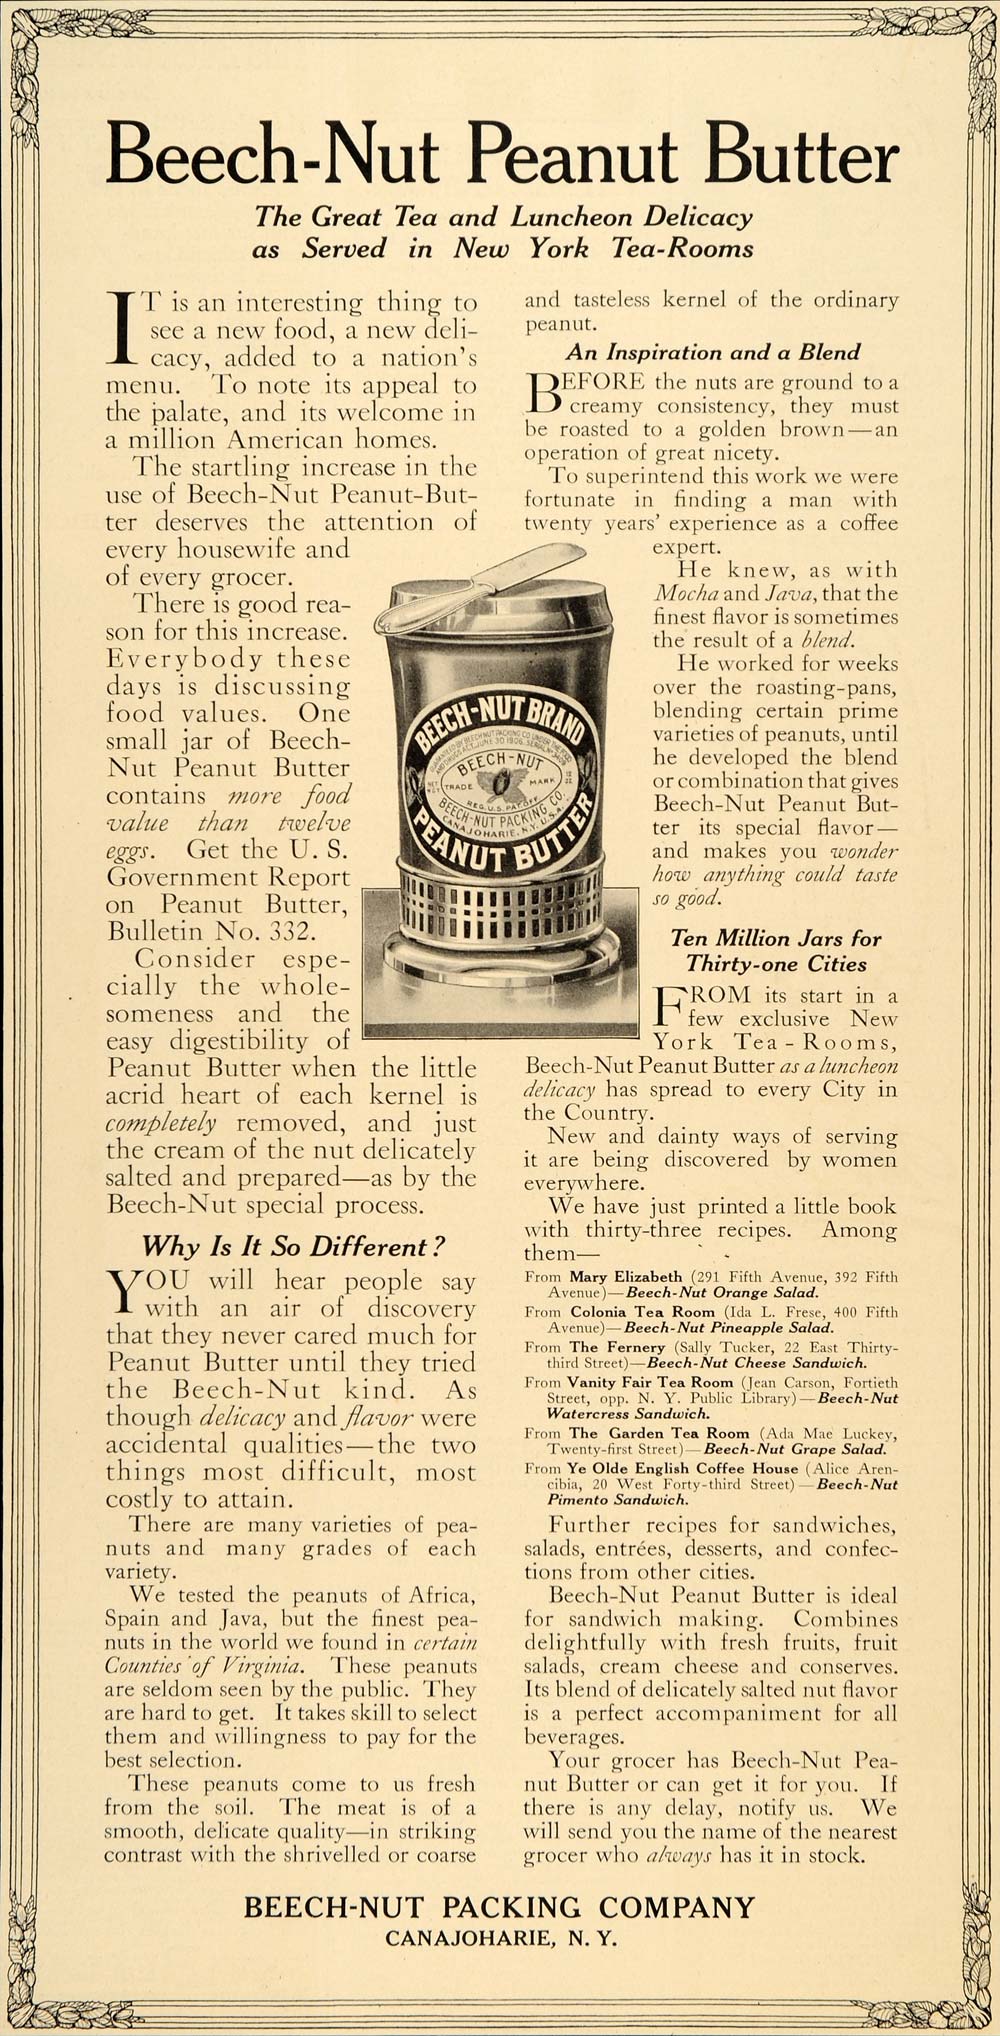 1914 Ad Beech-Nut Peanut Butter Canajoharie NY Ada Mae - ORIGINAL LHJ1